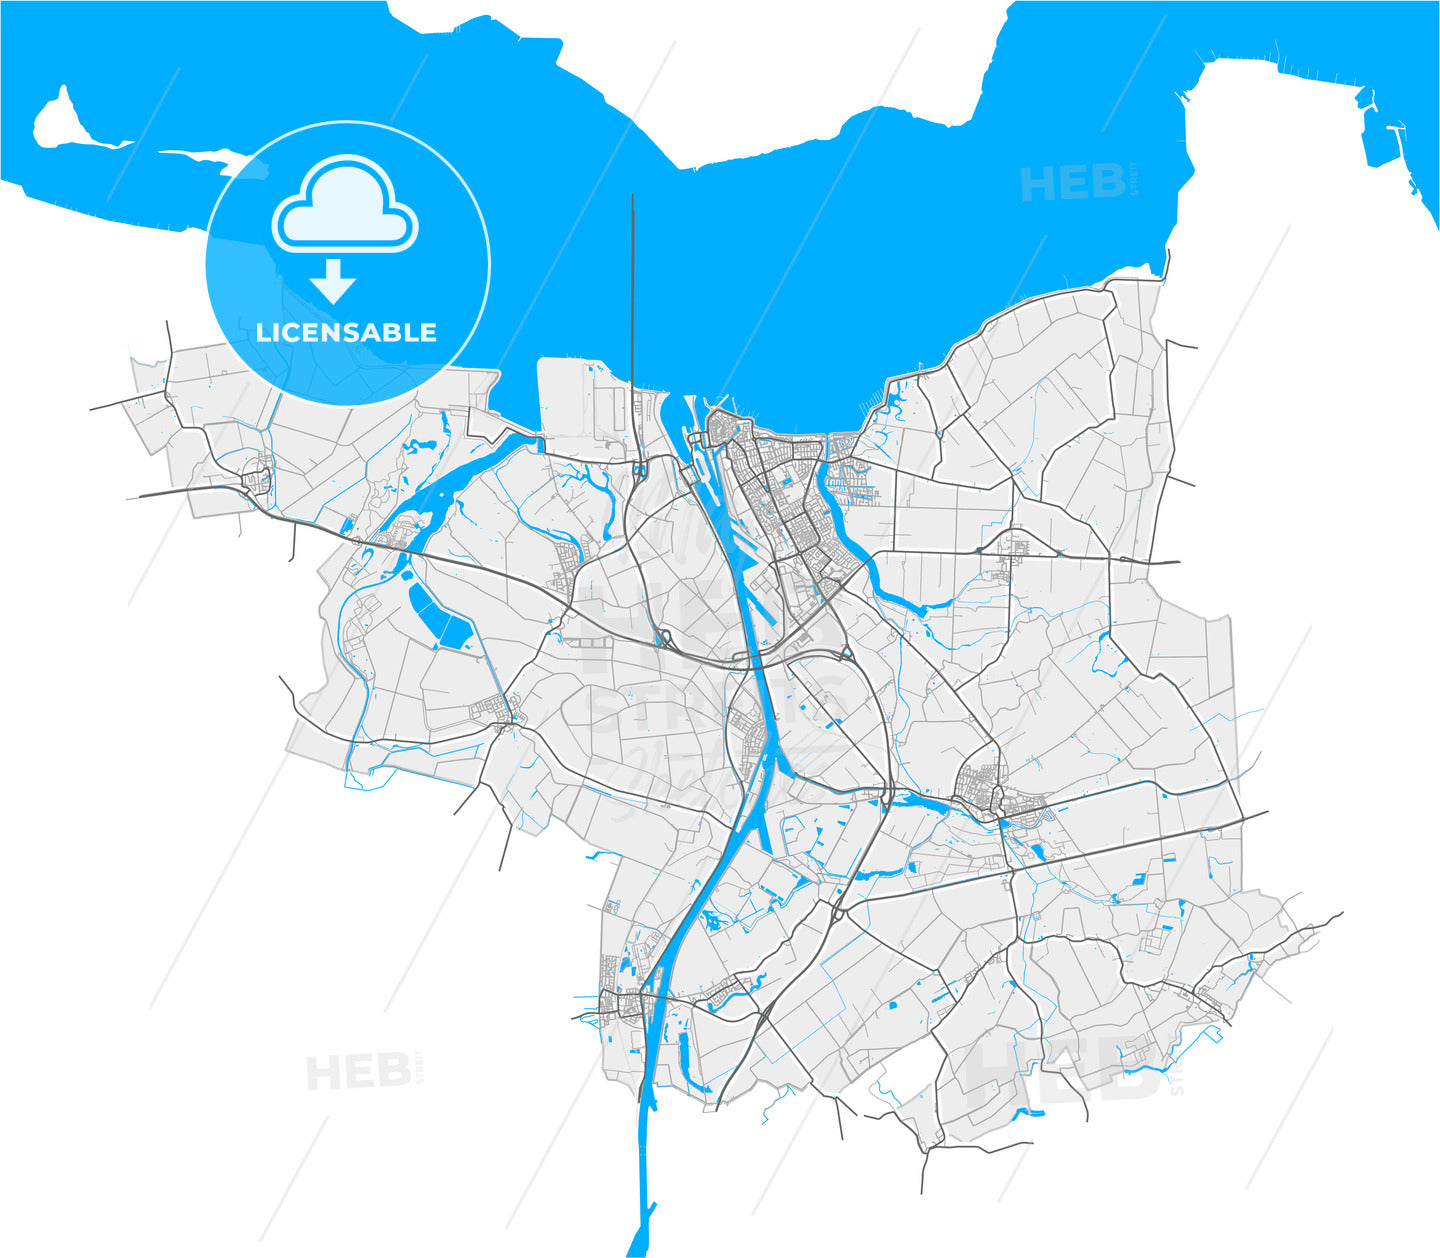 Terneuzen, Zeeland, Netherlands, high quality vector map